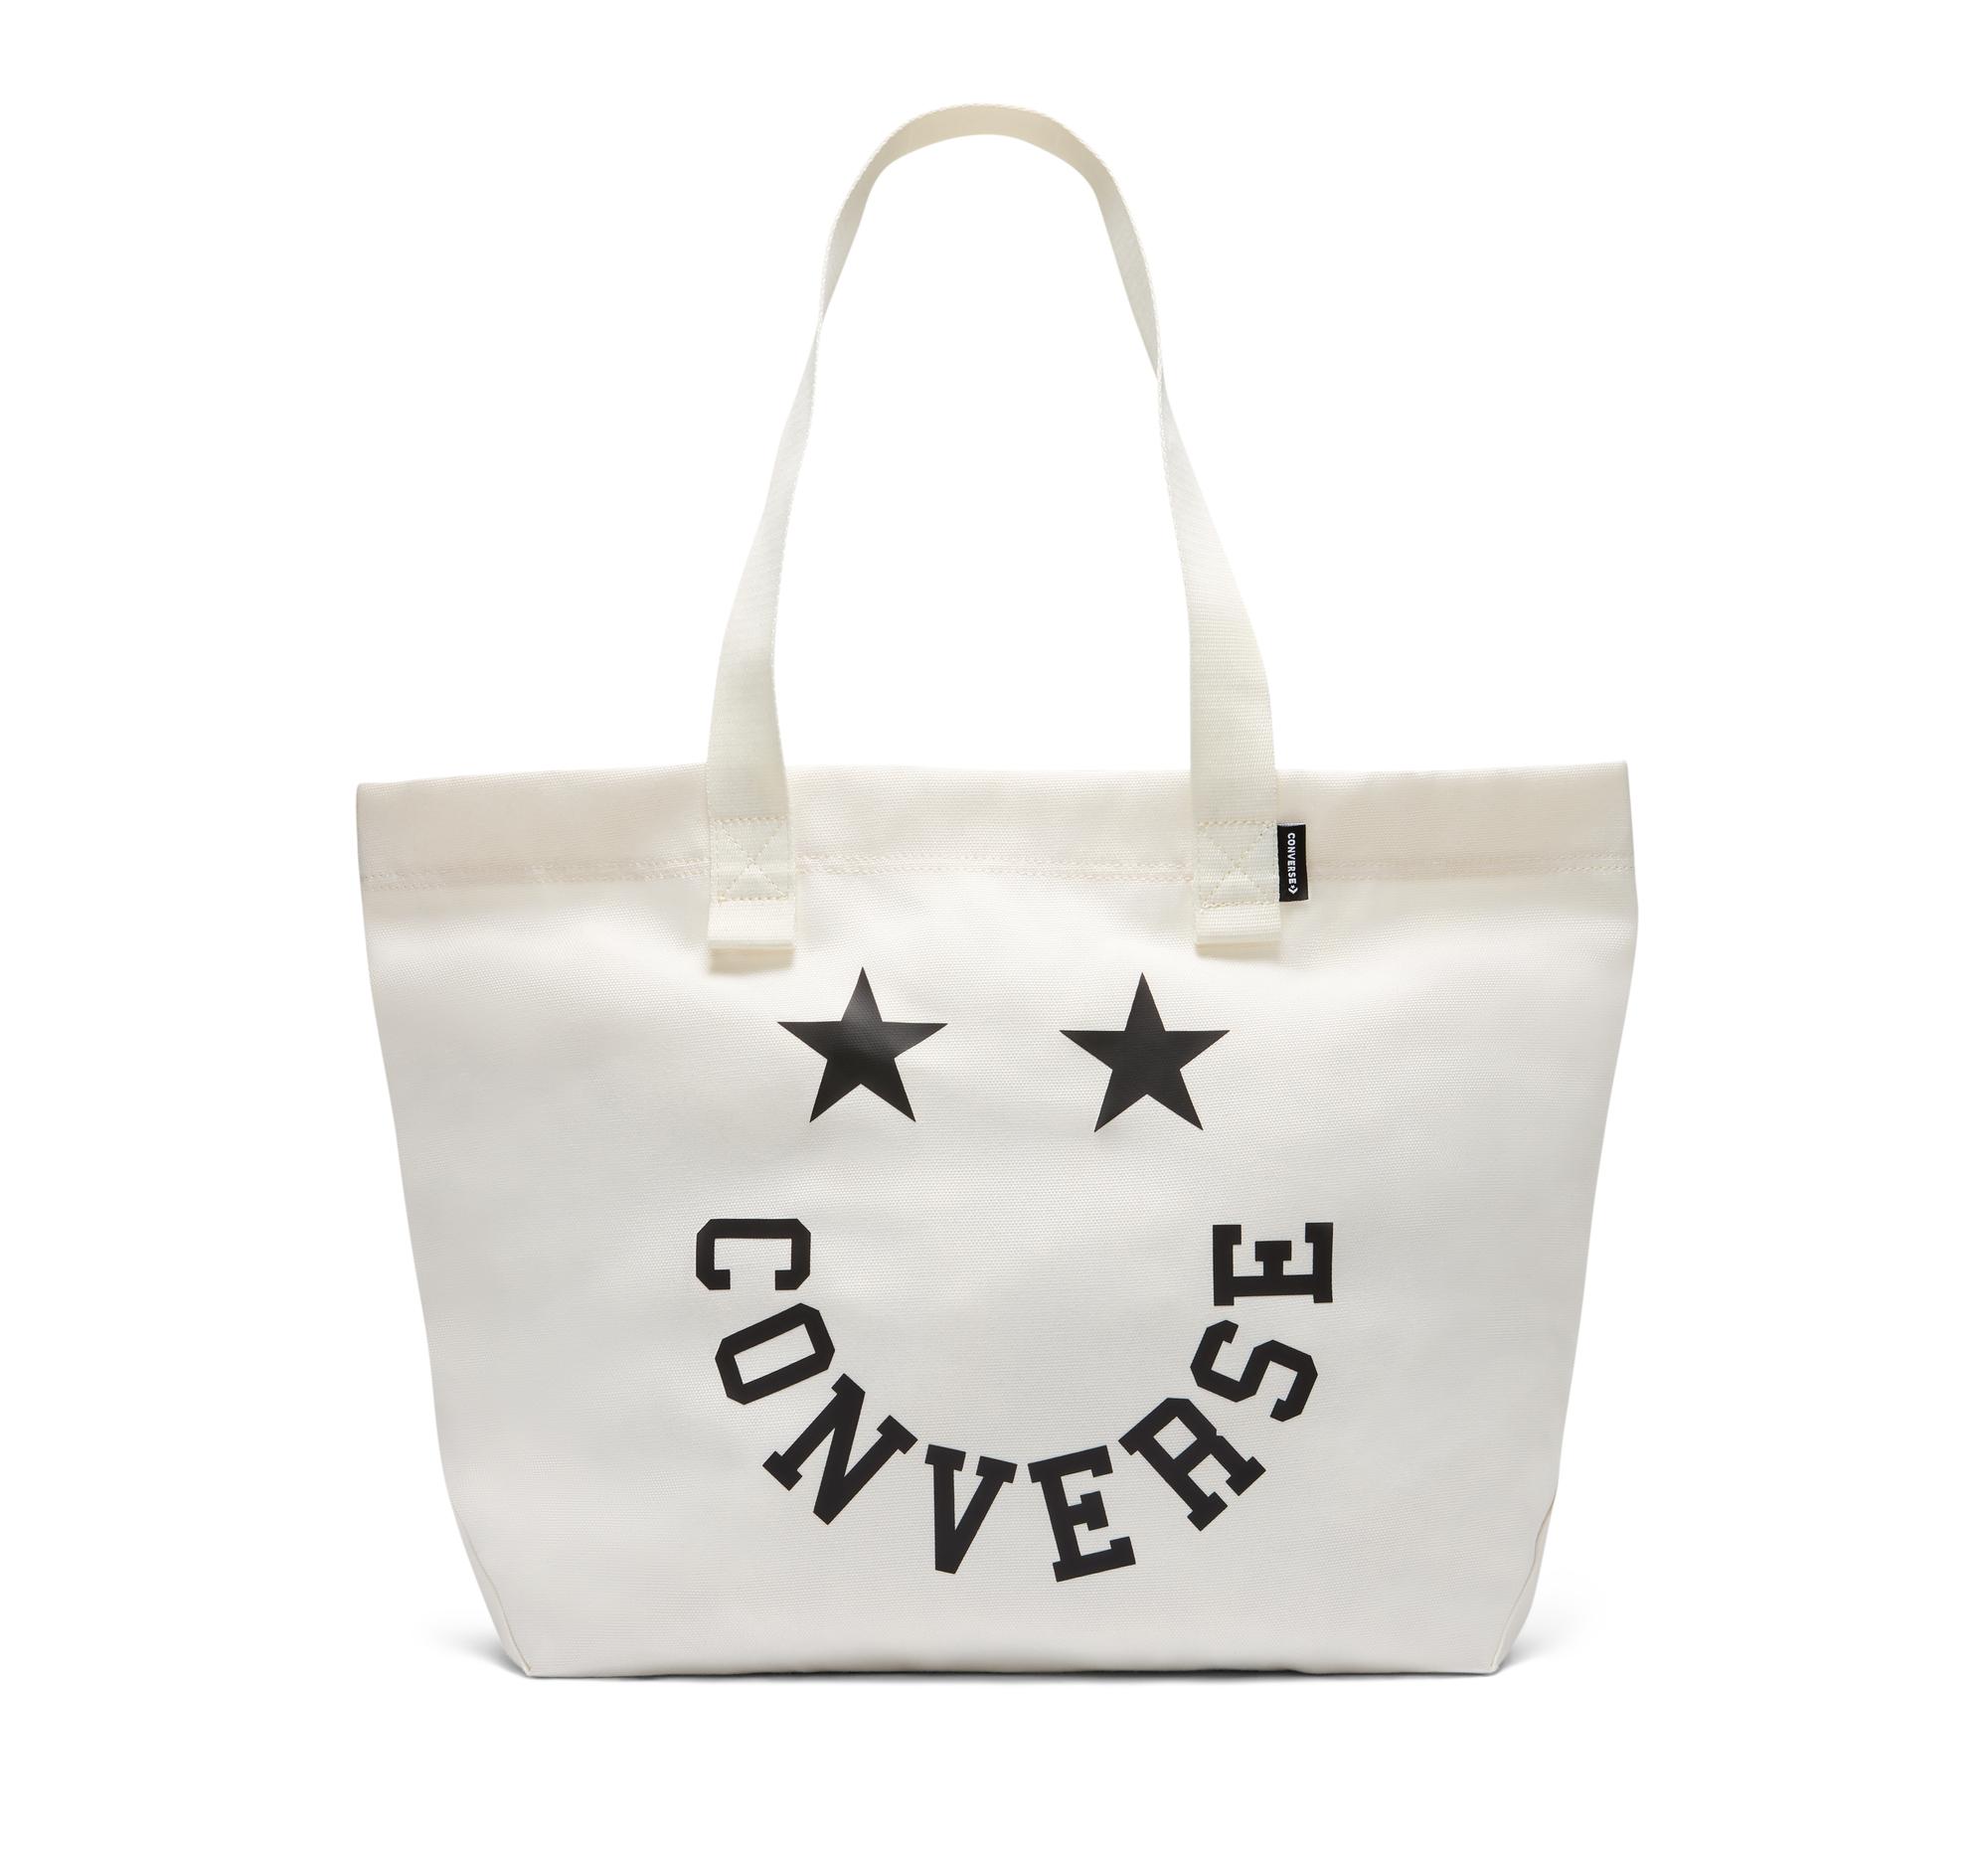 converse canvas bag